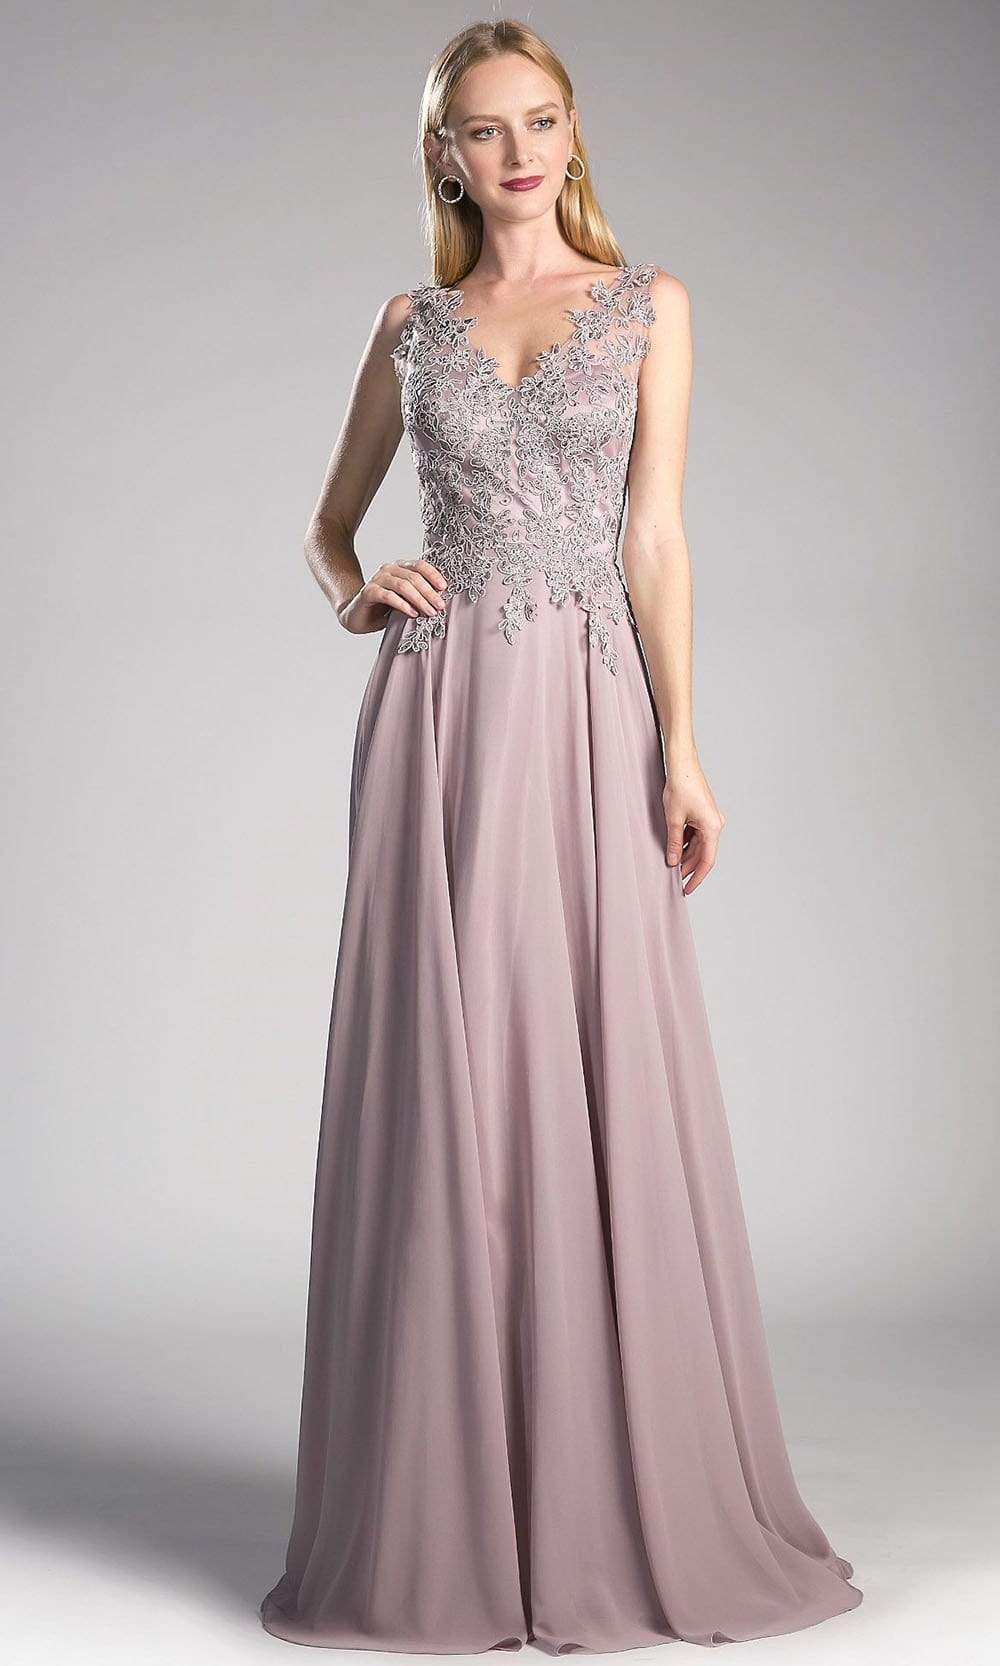 Cinderella Divine - 9177 Beaded Lace V-neck A-line Dress in Purple